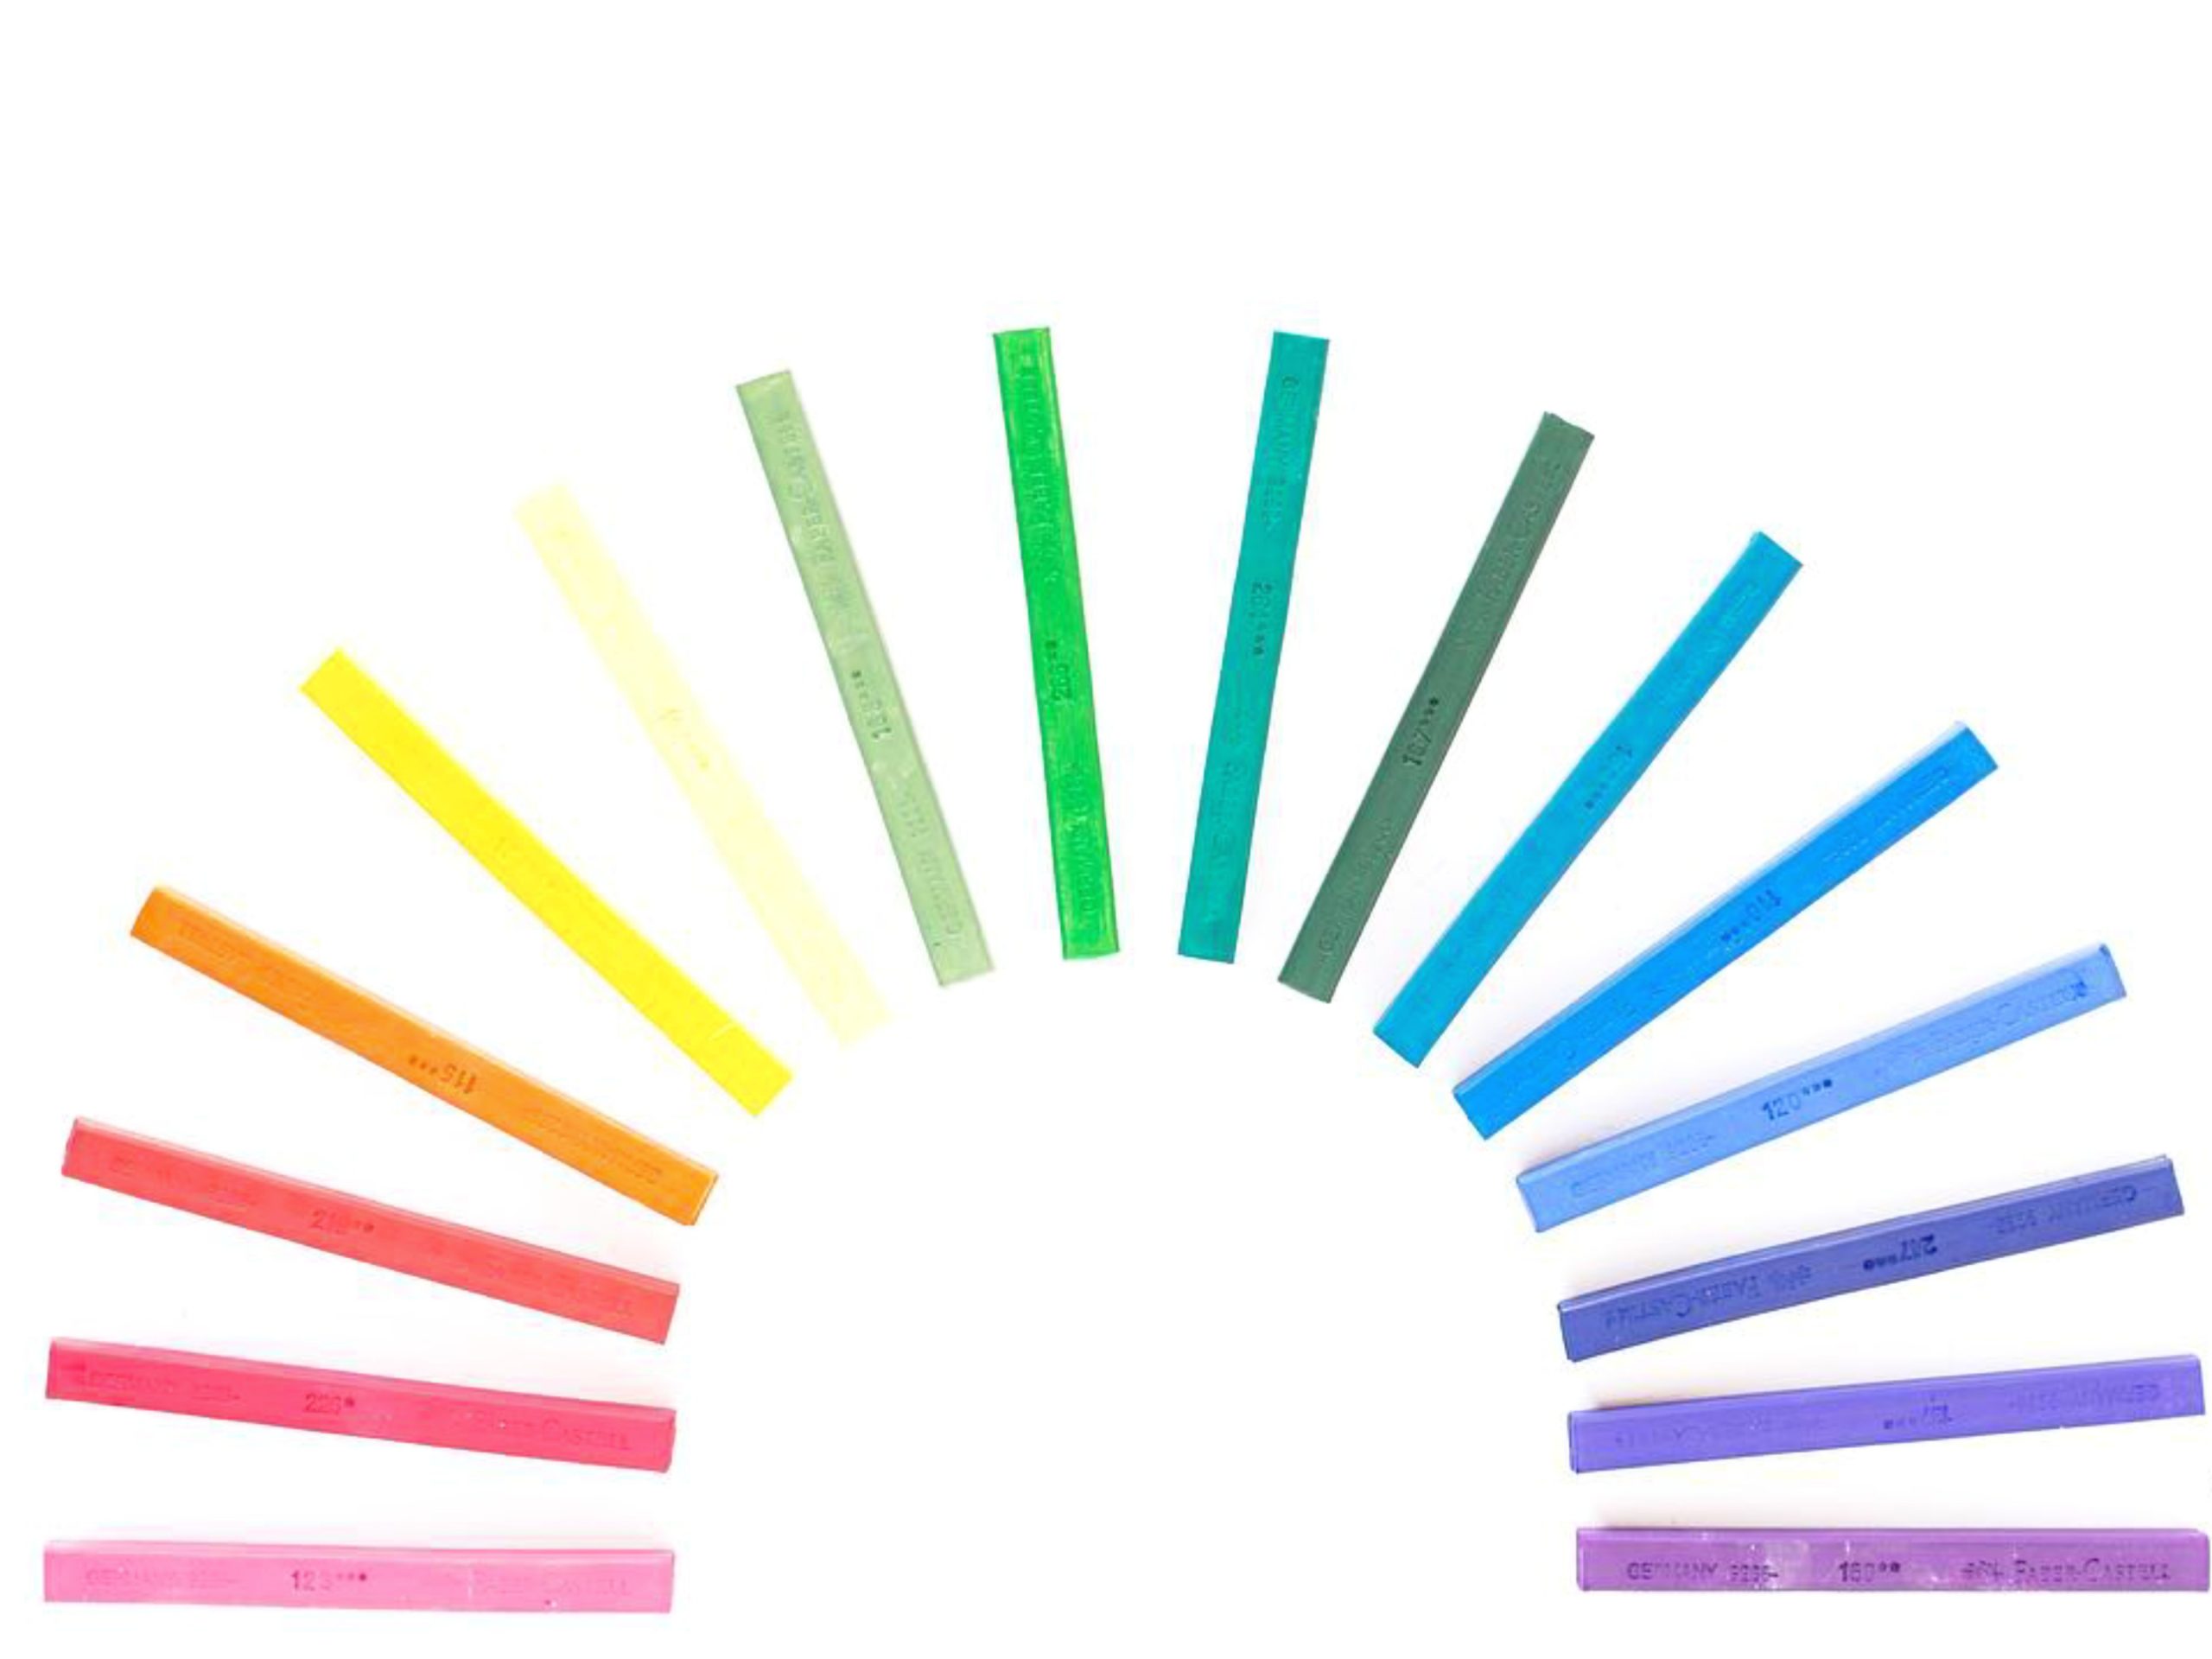 A circular design made with colorful sticks